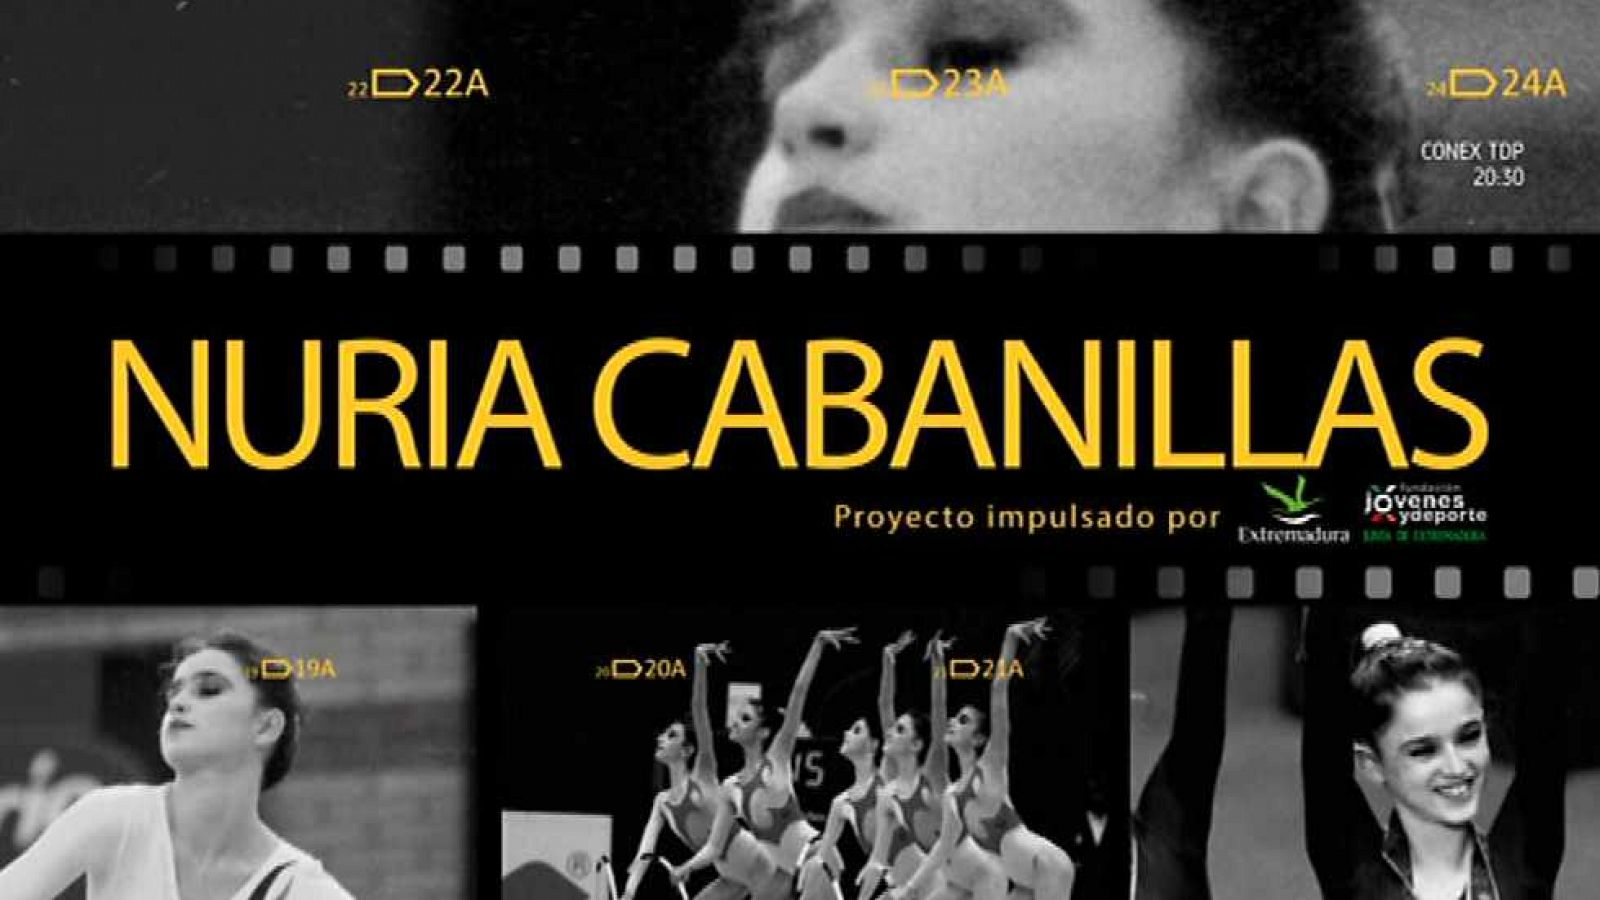 Mujer y deporte - Gimnasia rítmica: Nuria Cabanillas